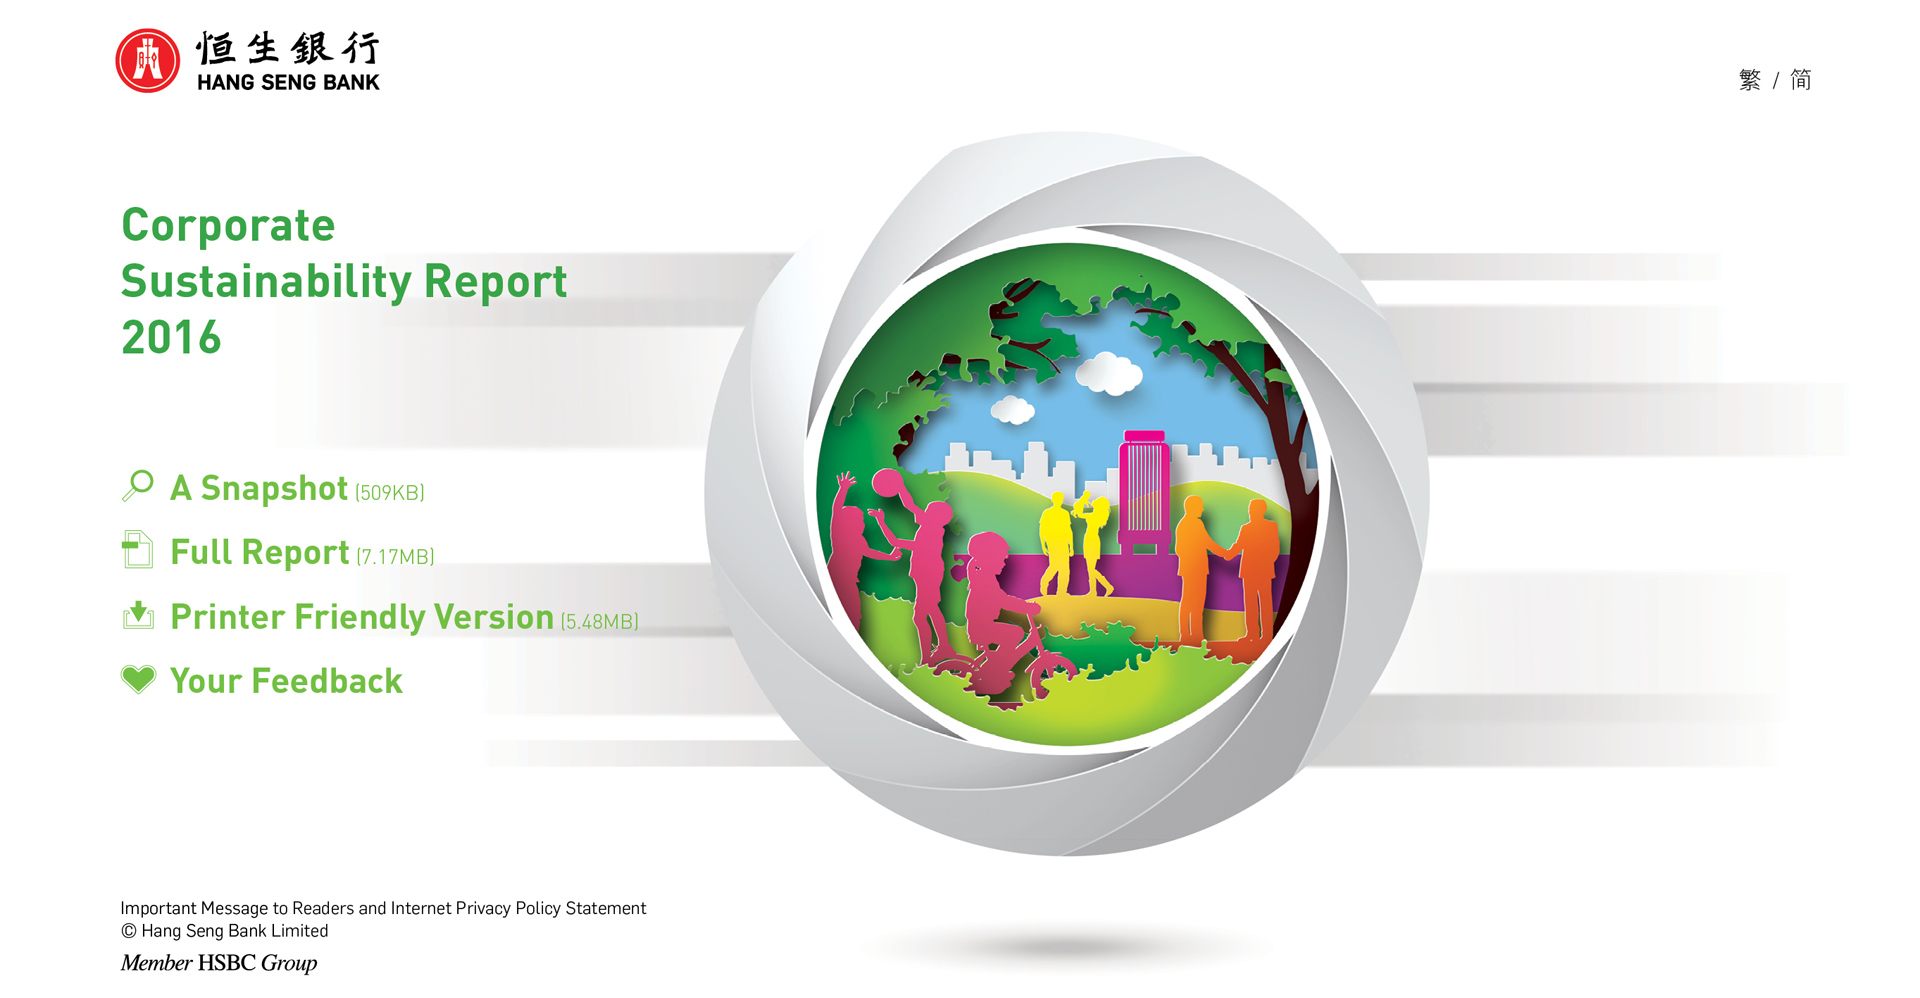 Corporate Sustainability Report 2016